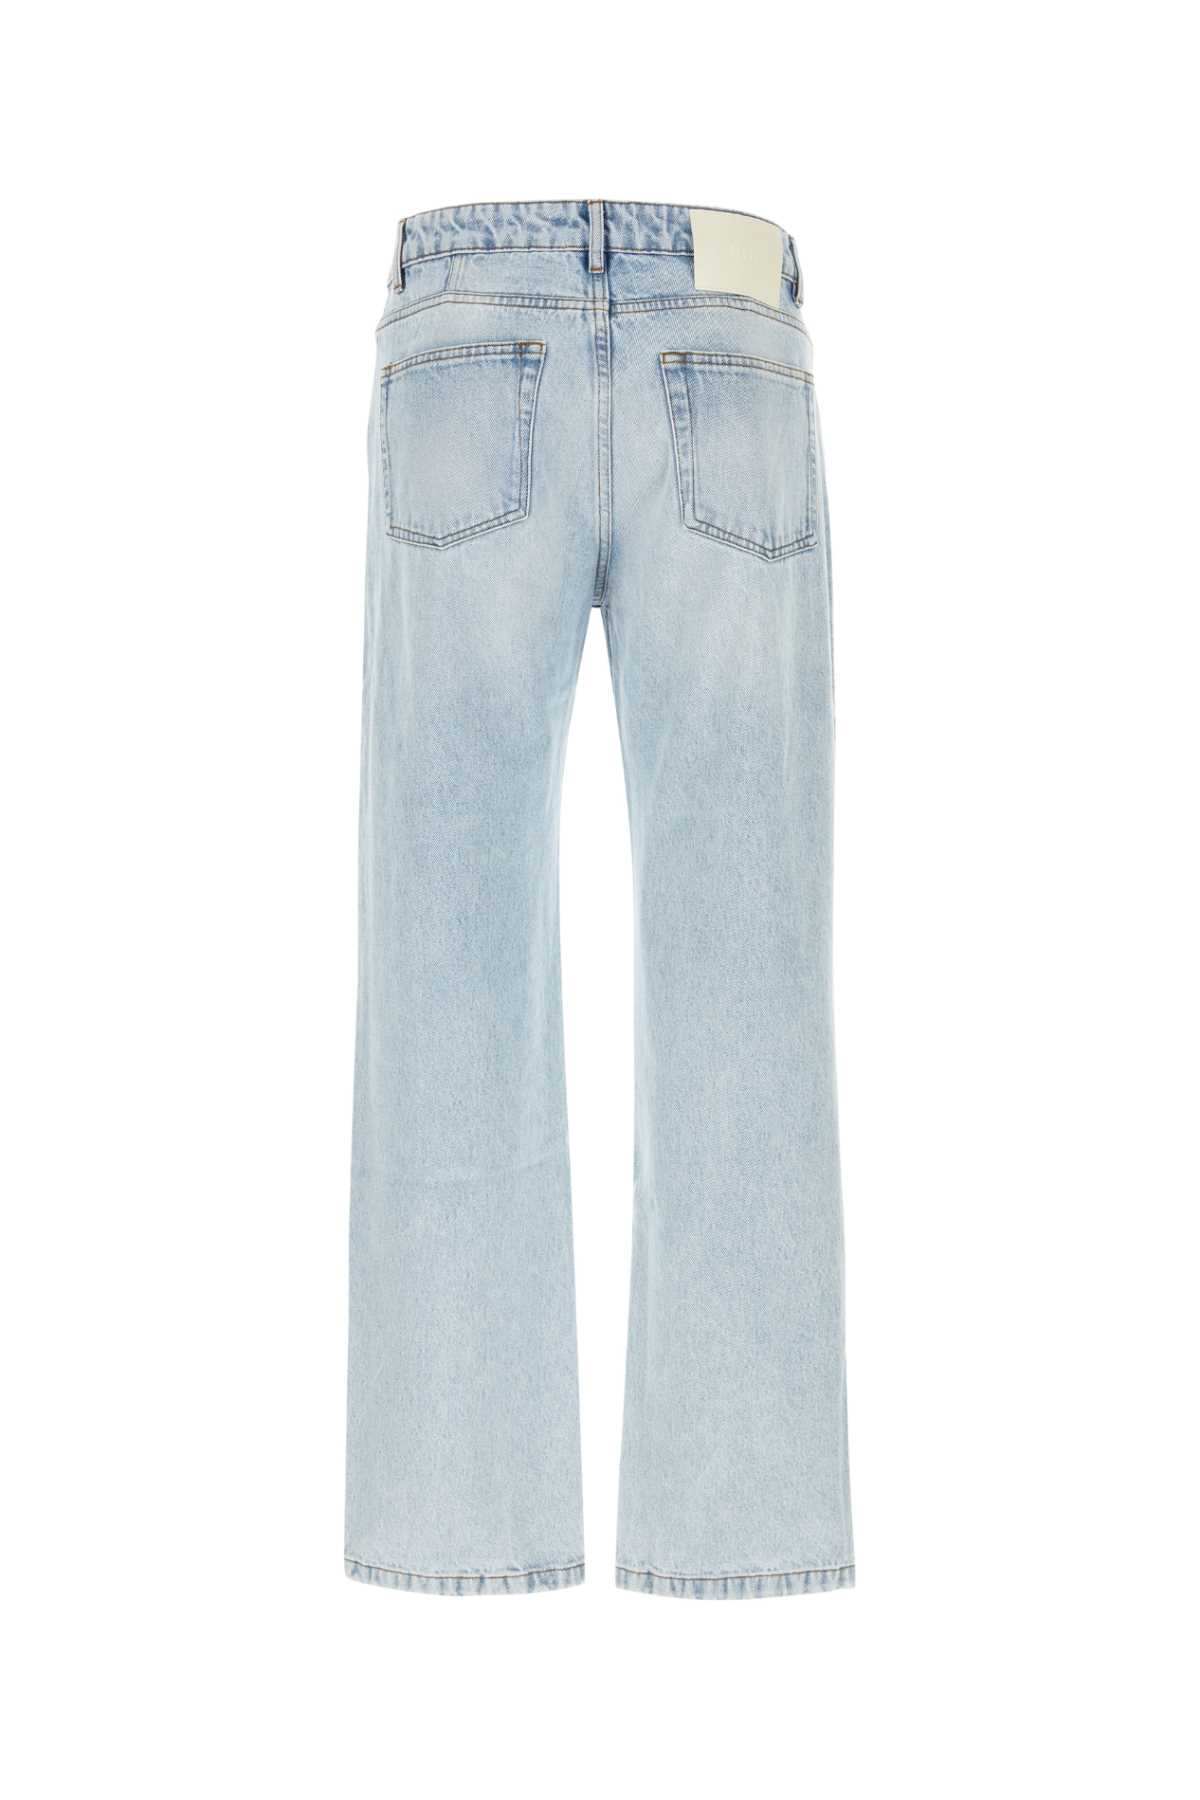 Shop Ami Alexandre Mattiussi Denim Jeans In Bleujavel